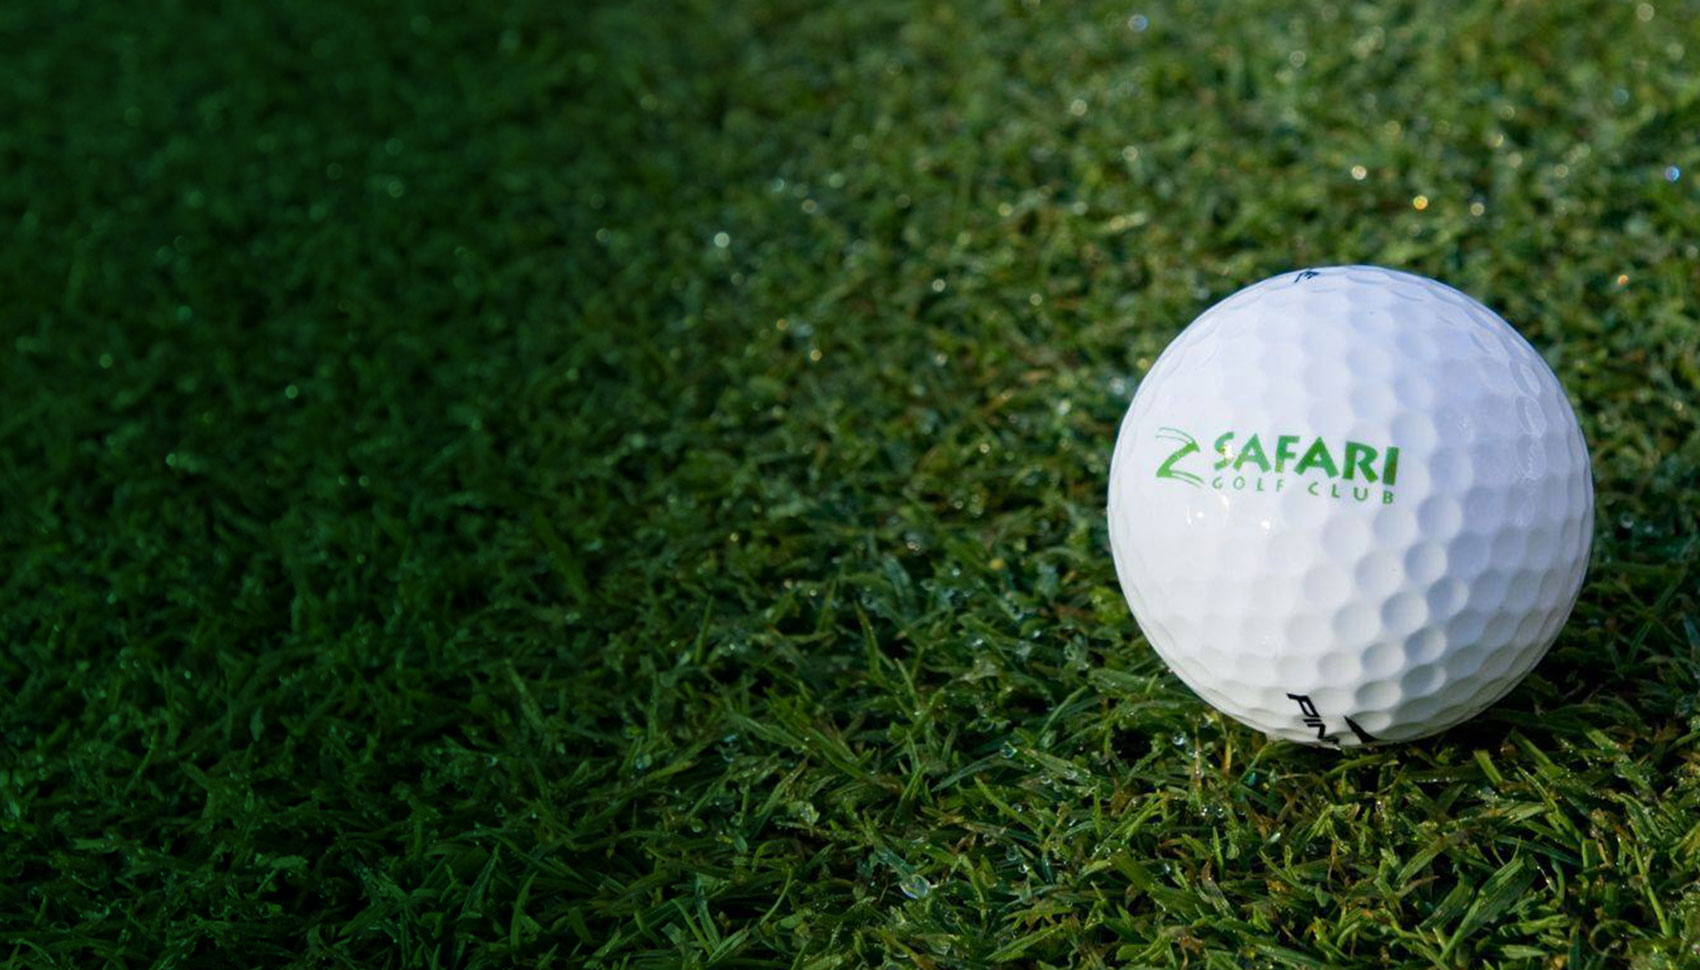 safari Golf golfball